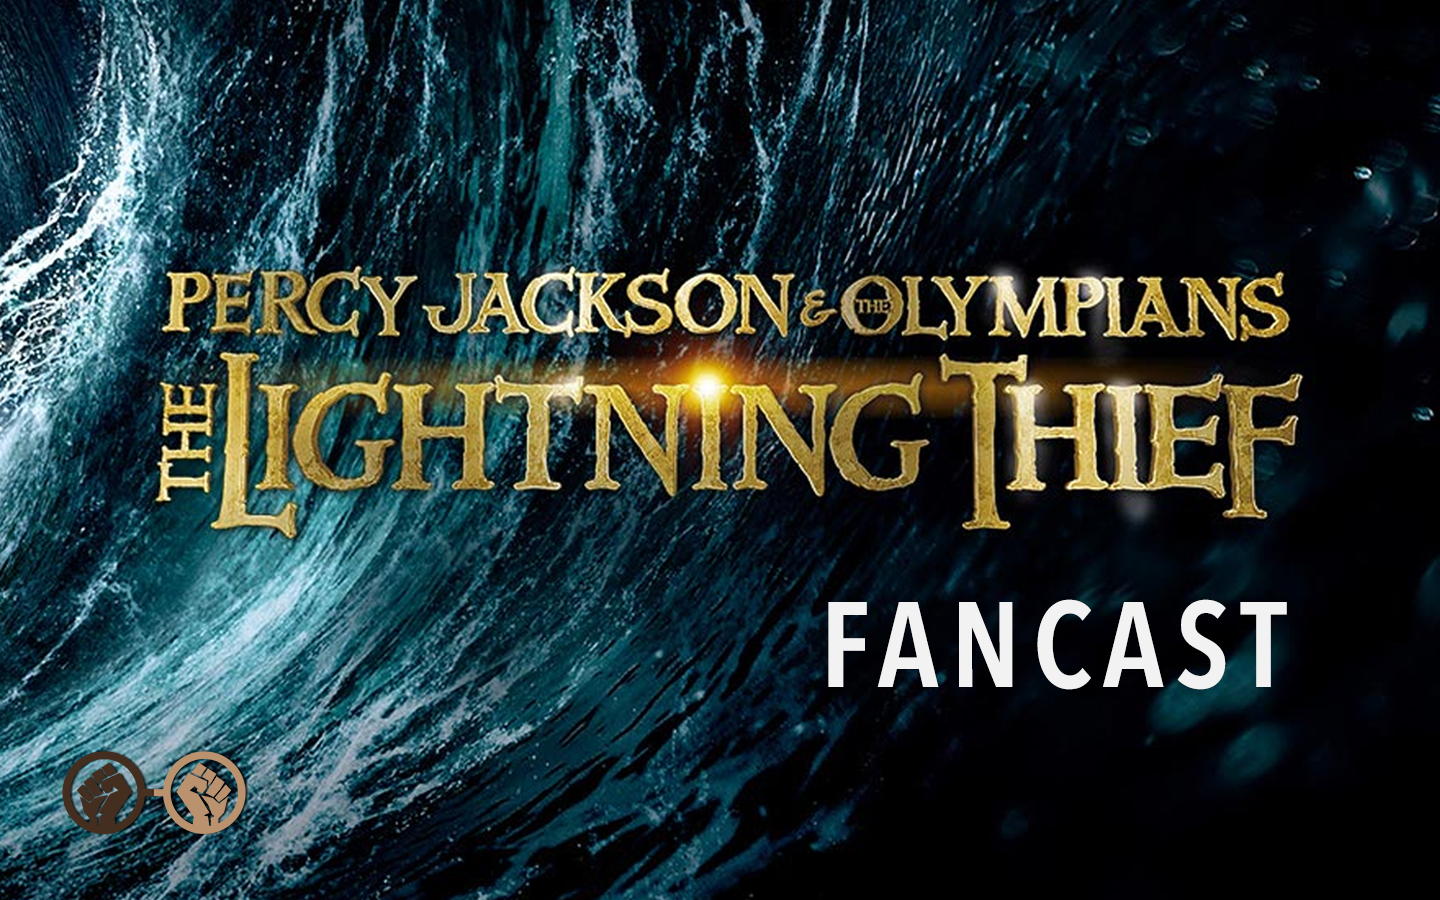 Percy Jackson Fancast